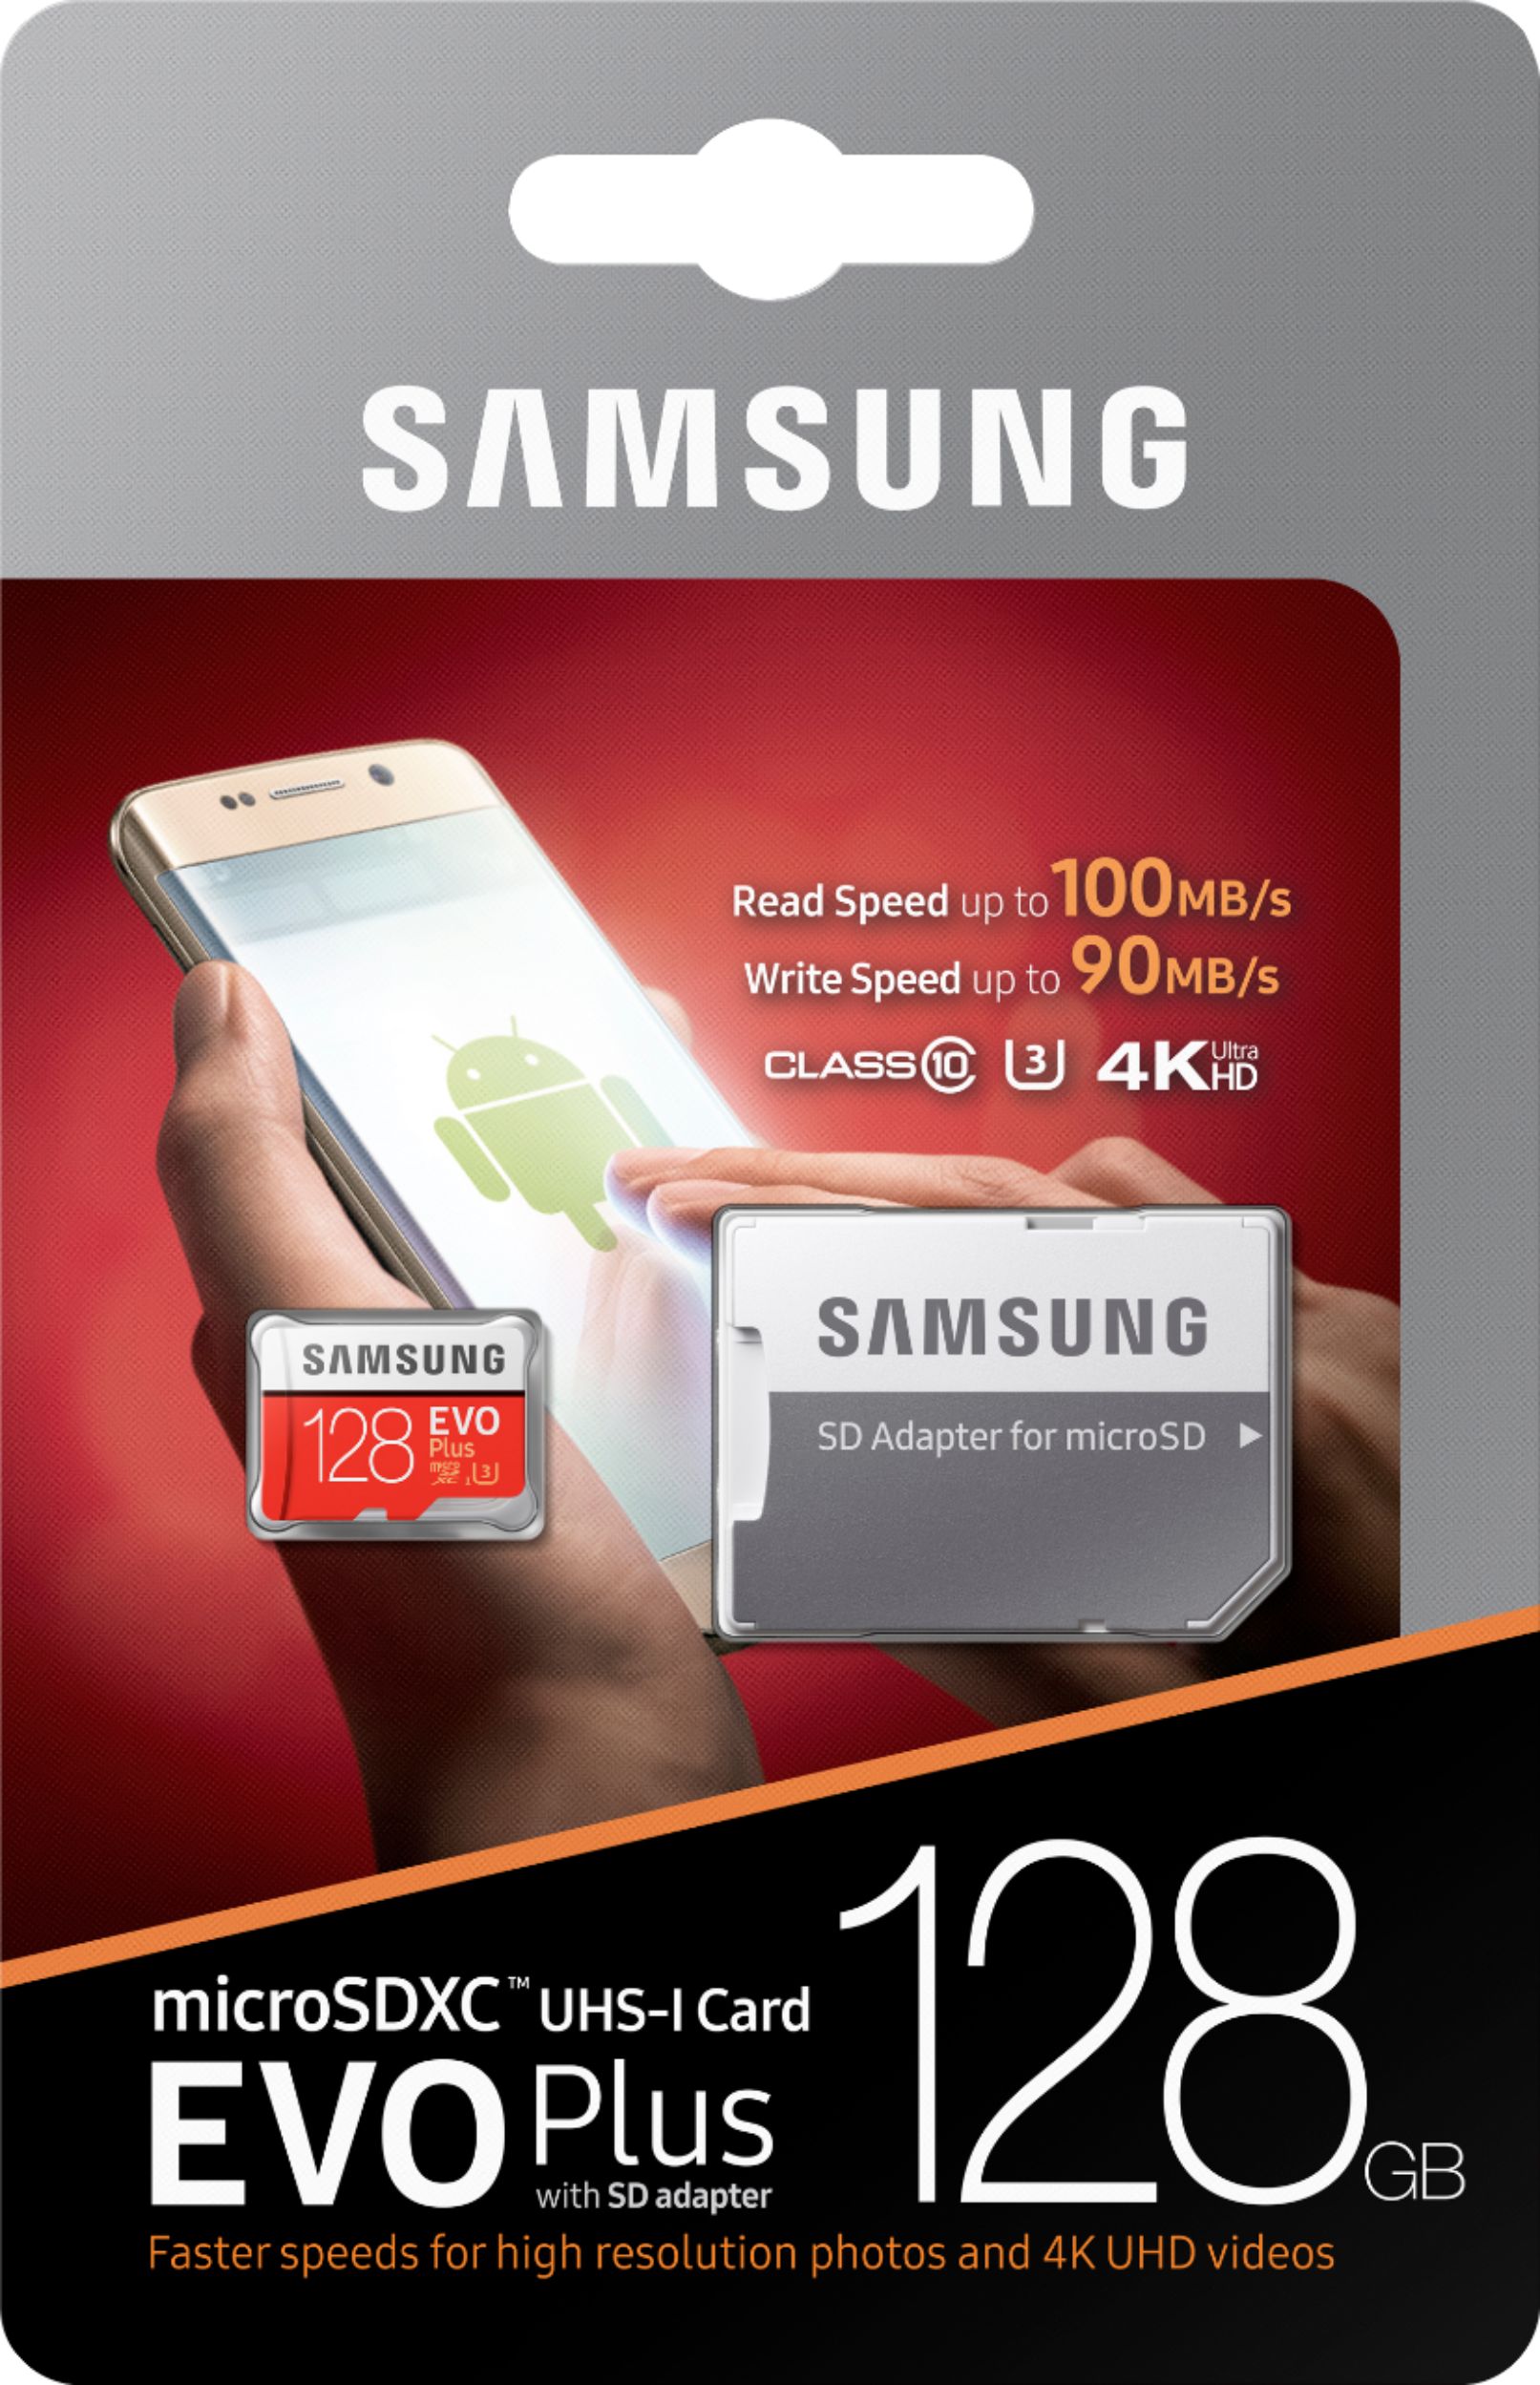 Buy Samsung 128 GB EVO Plus microSDXC Memory Card at Reliance Digital